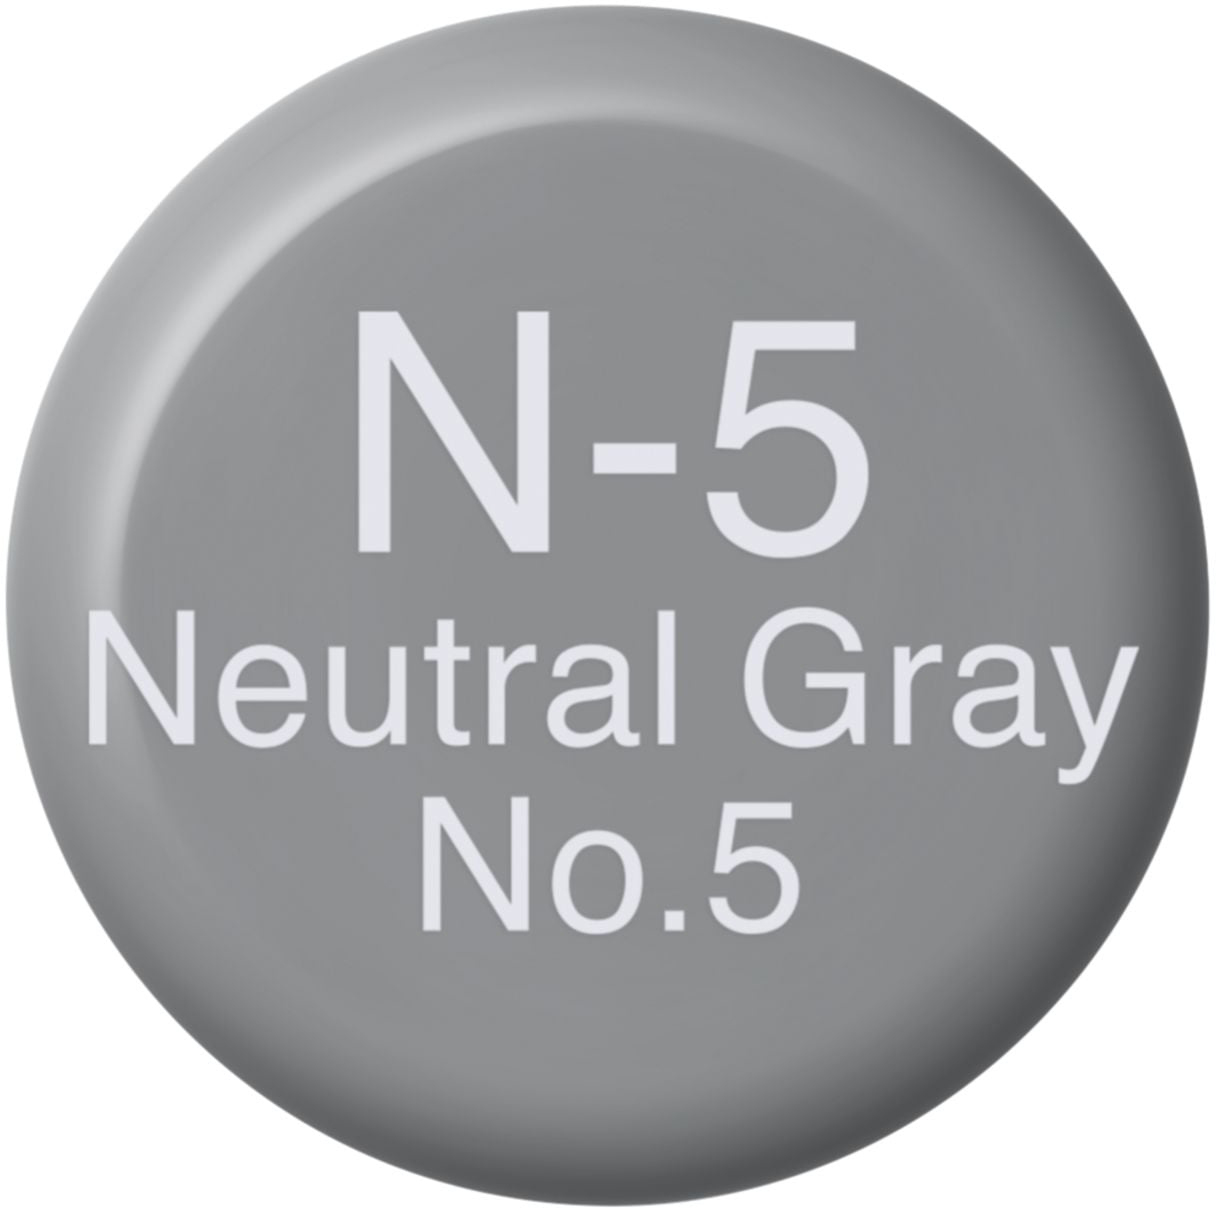 COPIC Ink Refill 2107691 N-5 - Neutral Grey No.5